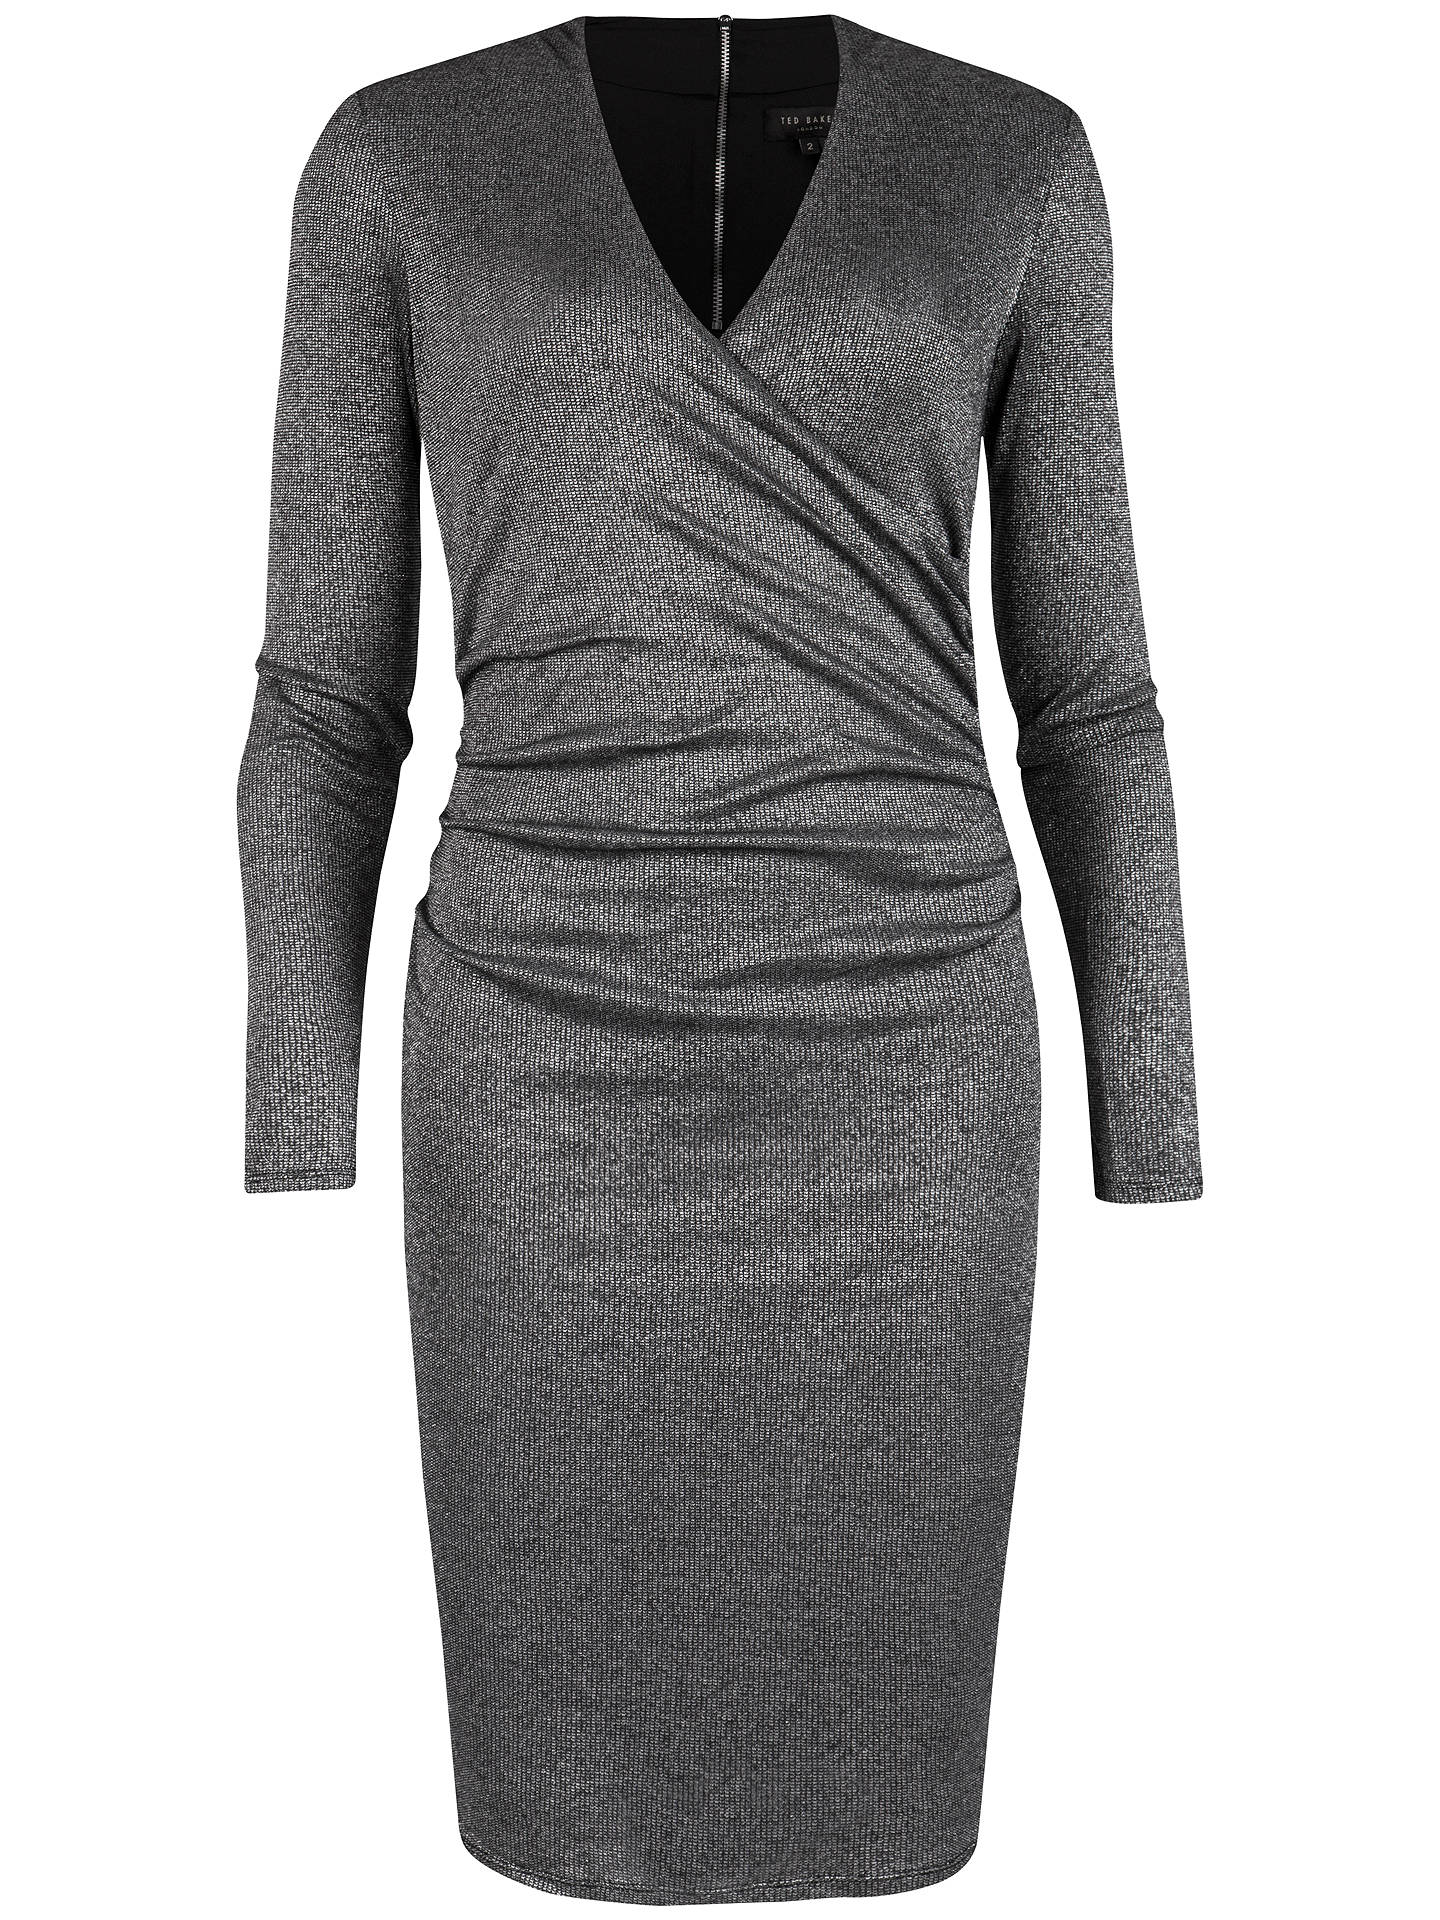 Ted Baker Metallic Wrap Dress, Grey at John Lewis & Partners